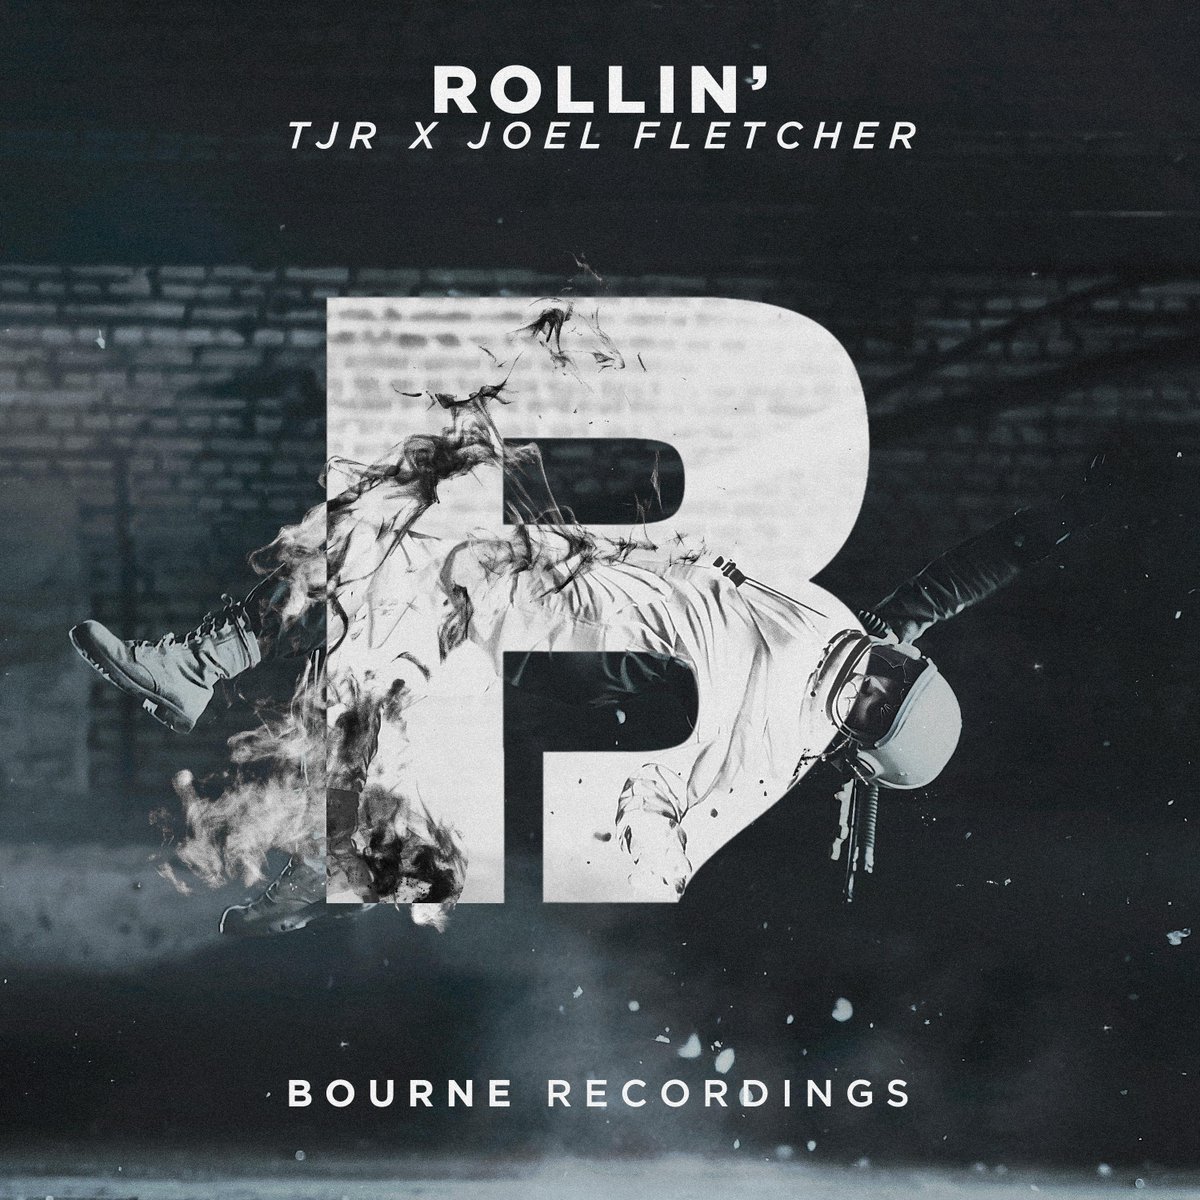 TJR & Joel Fletcher - Rollin' (Original Mix)